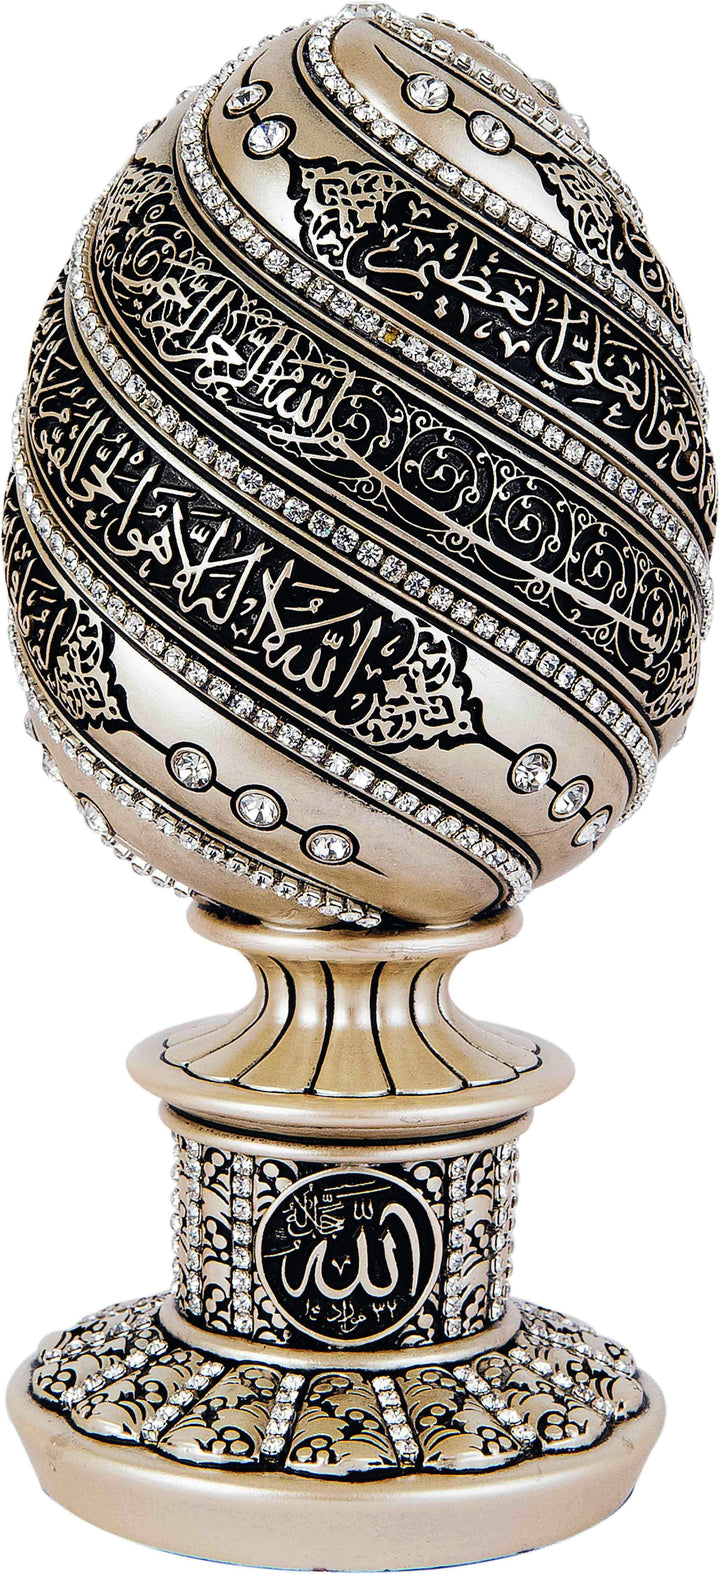 A beautiful golden and black egg sculpture engraved with Ayatul Kurs- BB-0988-2969-theislamcshop.com